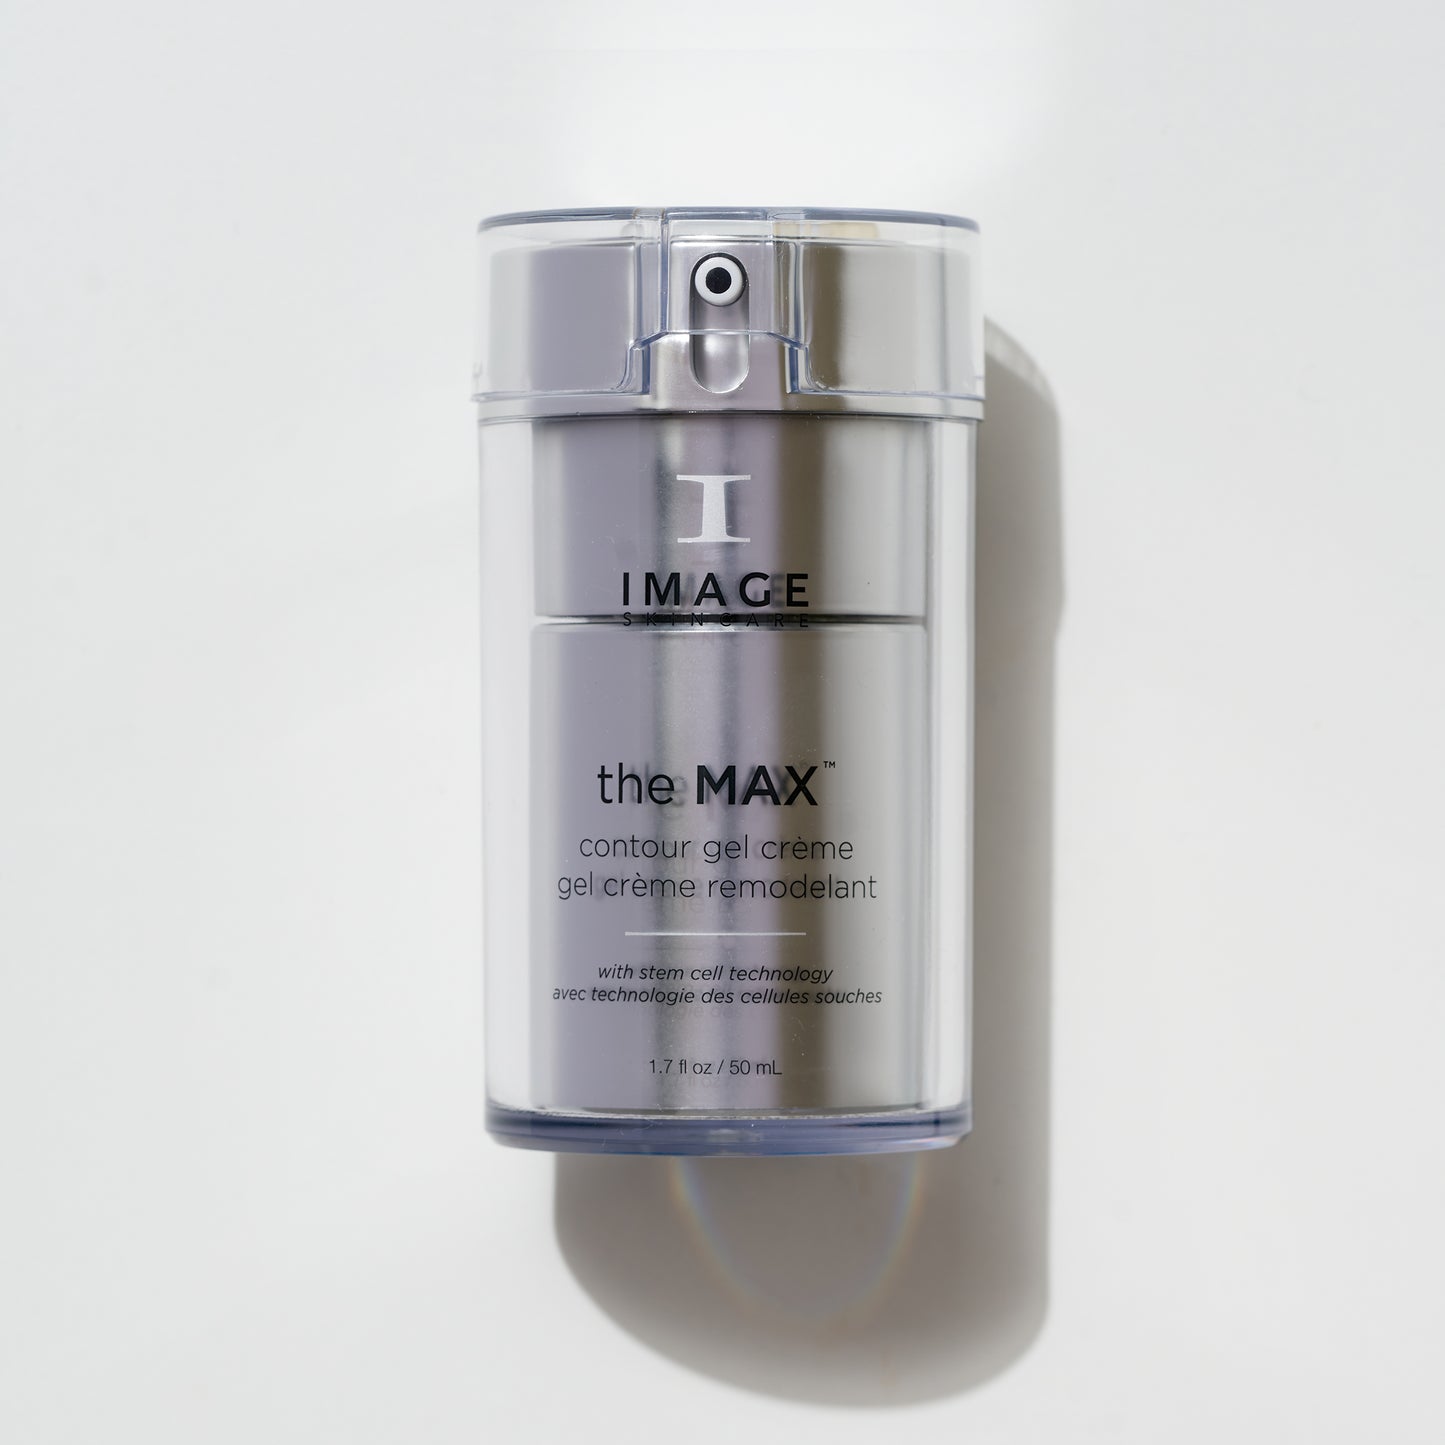 THE MAX Contour Gel Crème, Image Skincare